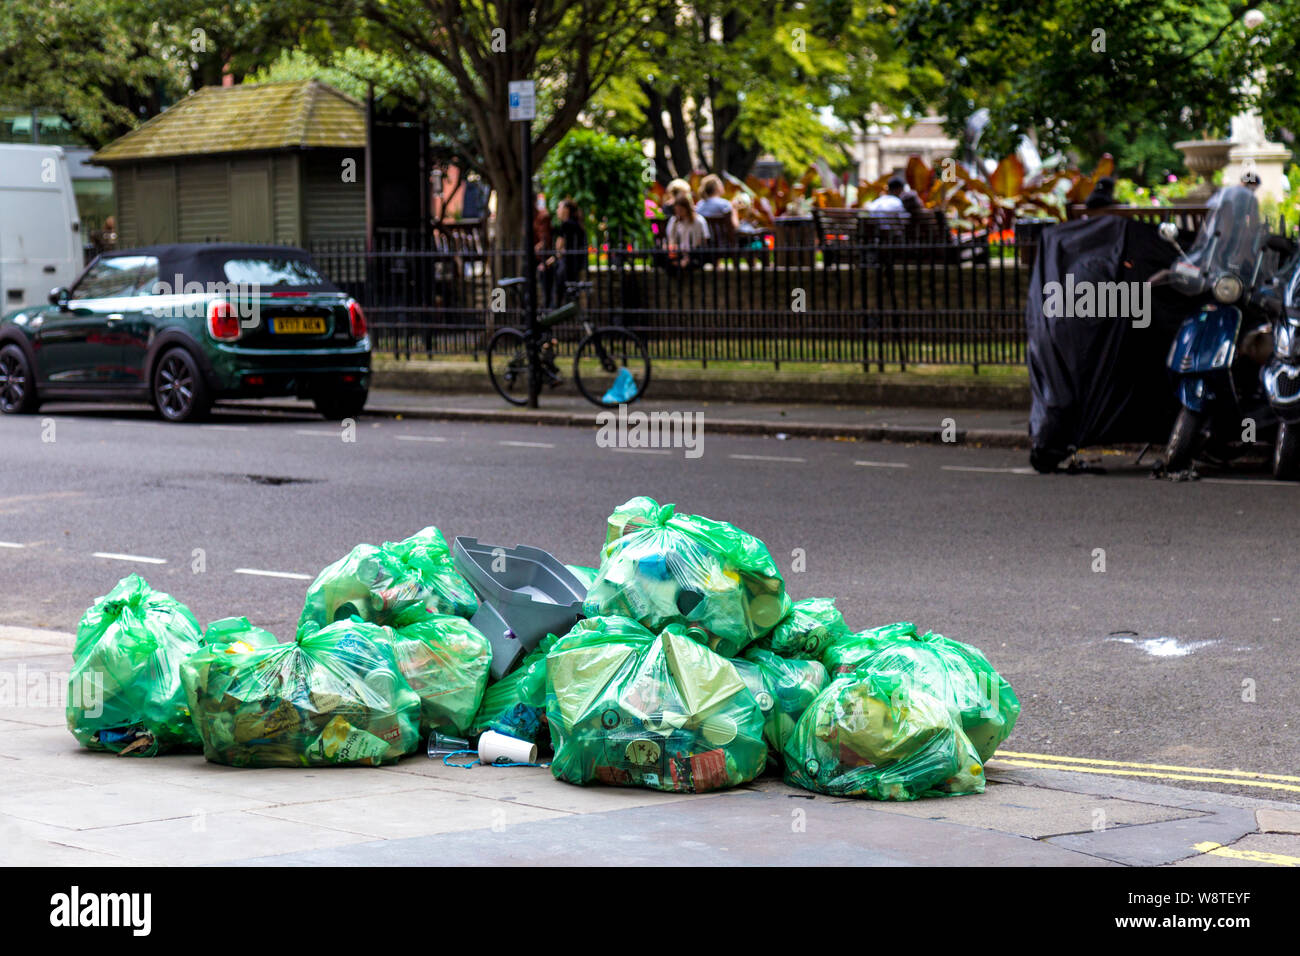 Rubbish bags on the street, London, UK Stock Photo